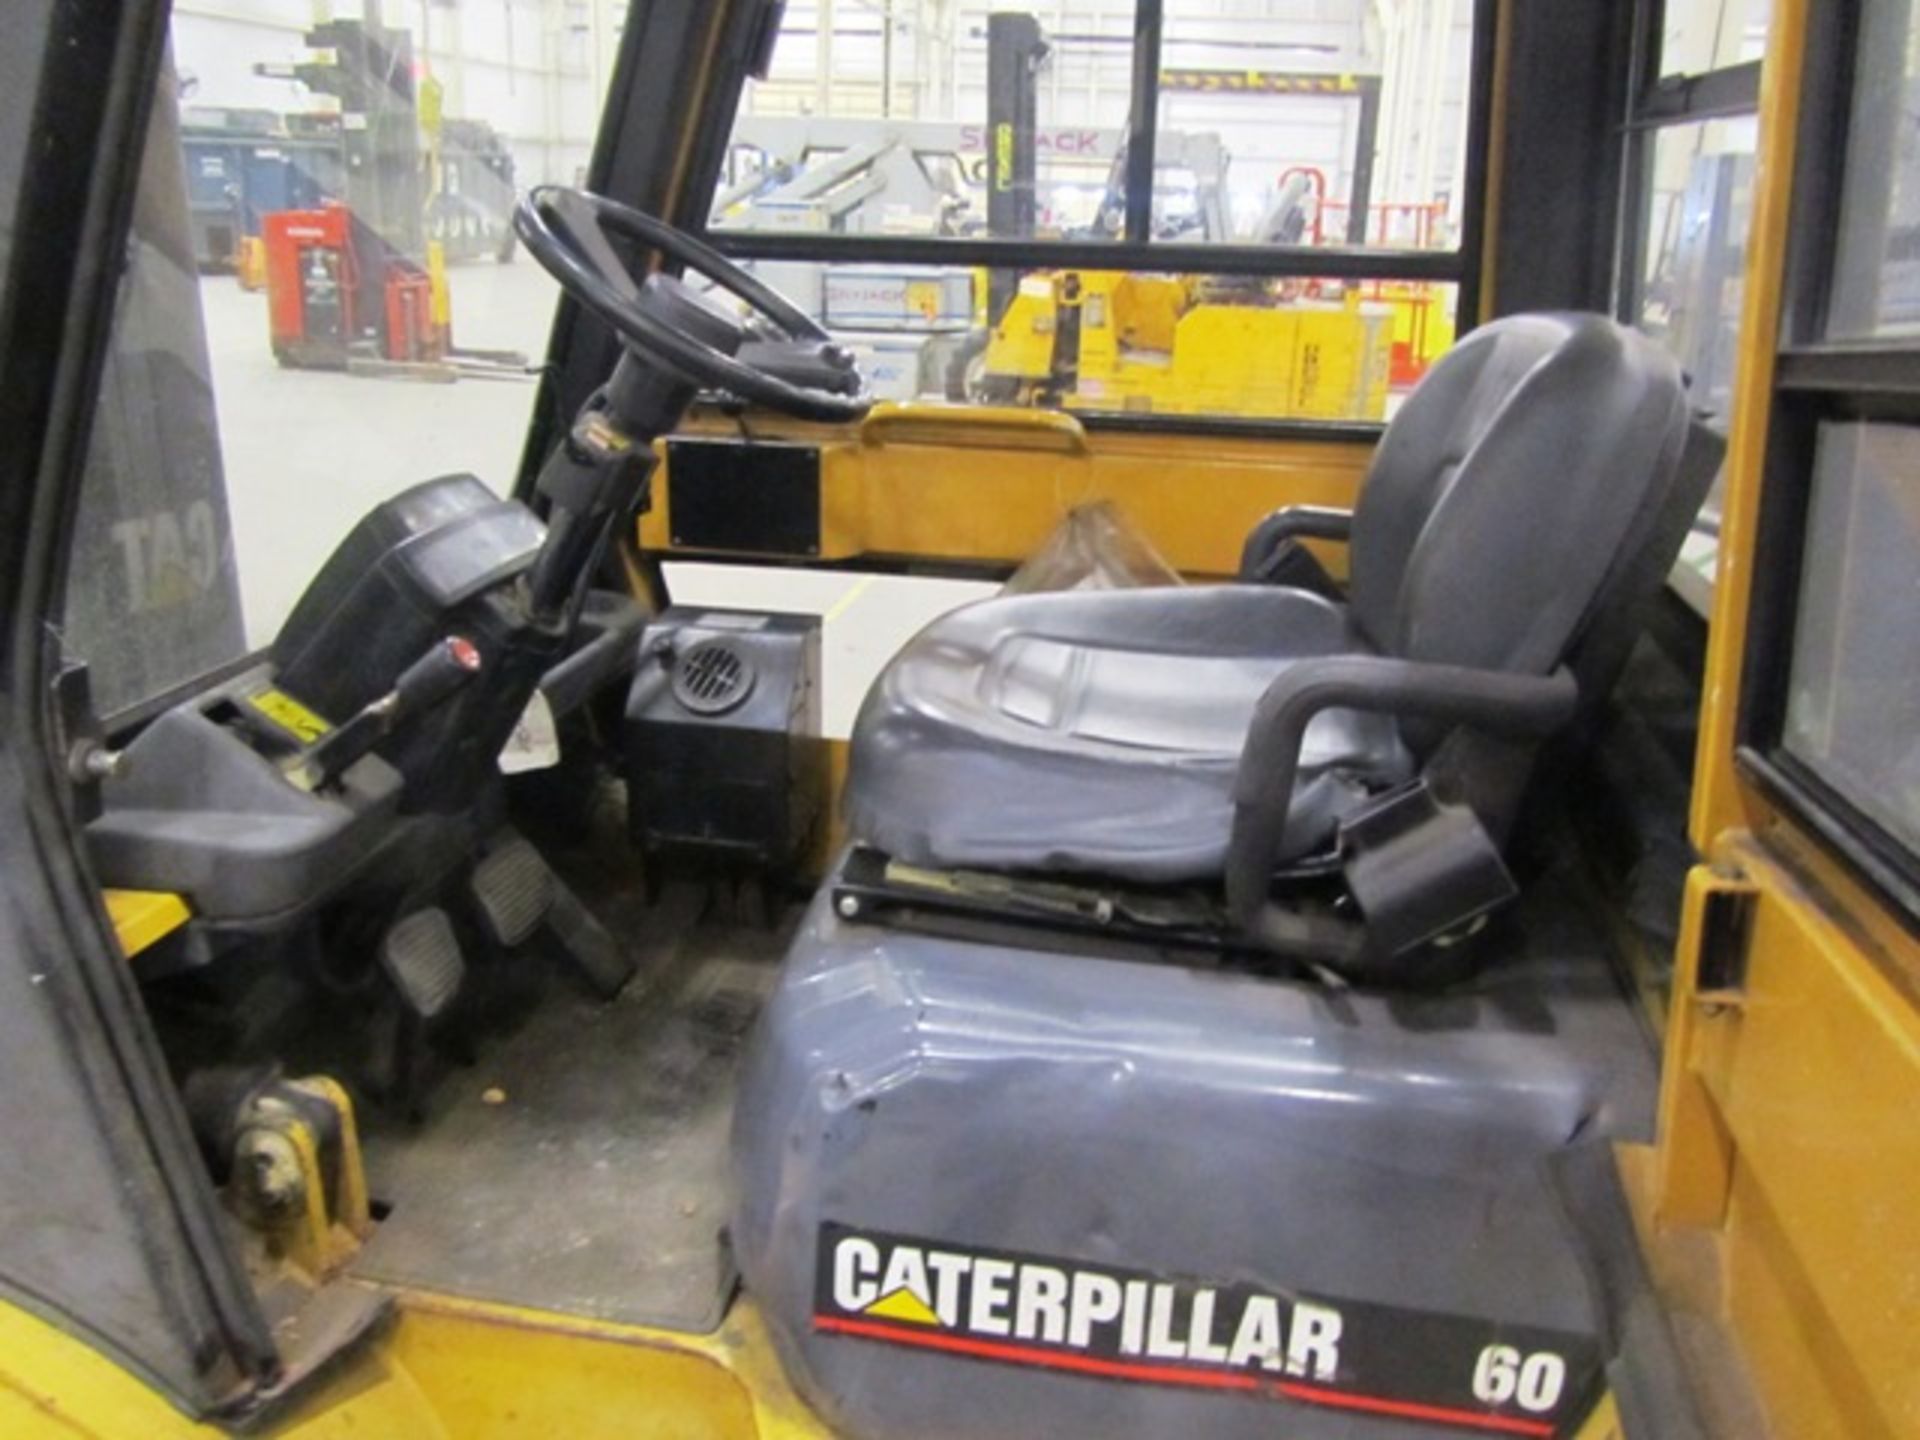 Caterpillar Model GP30 6,000lb Capacity Propane Forklift - Image 4 of 4